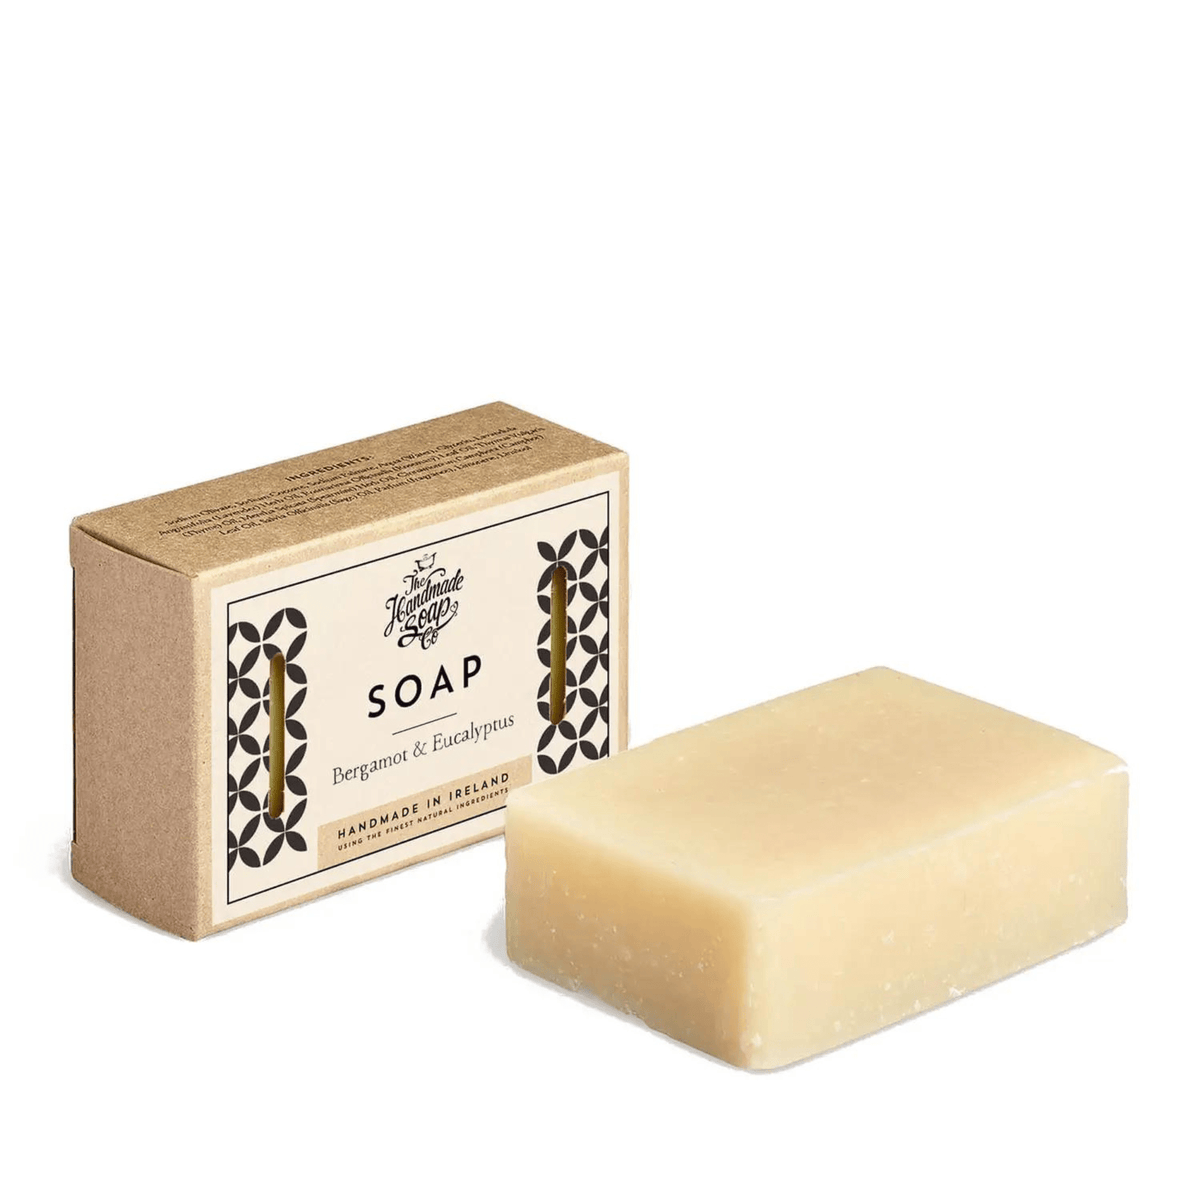 Primary Image of Bergamot & Eucalyptus Soap